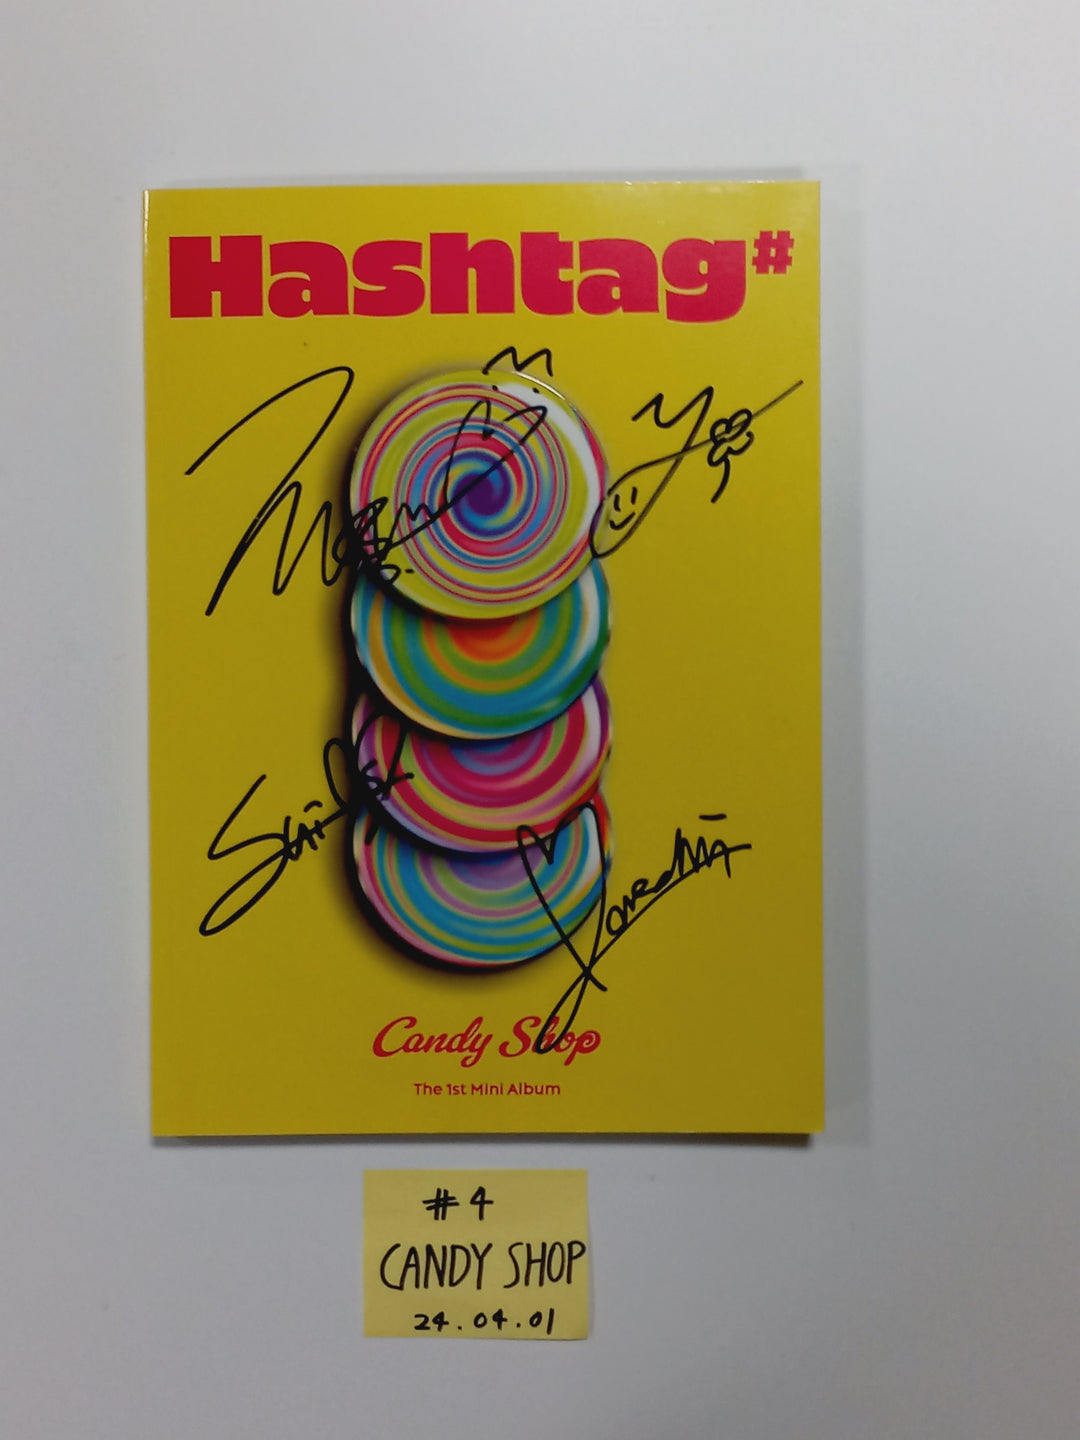 Candy Shop "Hashtag#", YOUNG POSSE "XXL" - Hand Autographed(Signed) Promo Album [24.4.1]